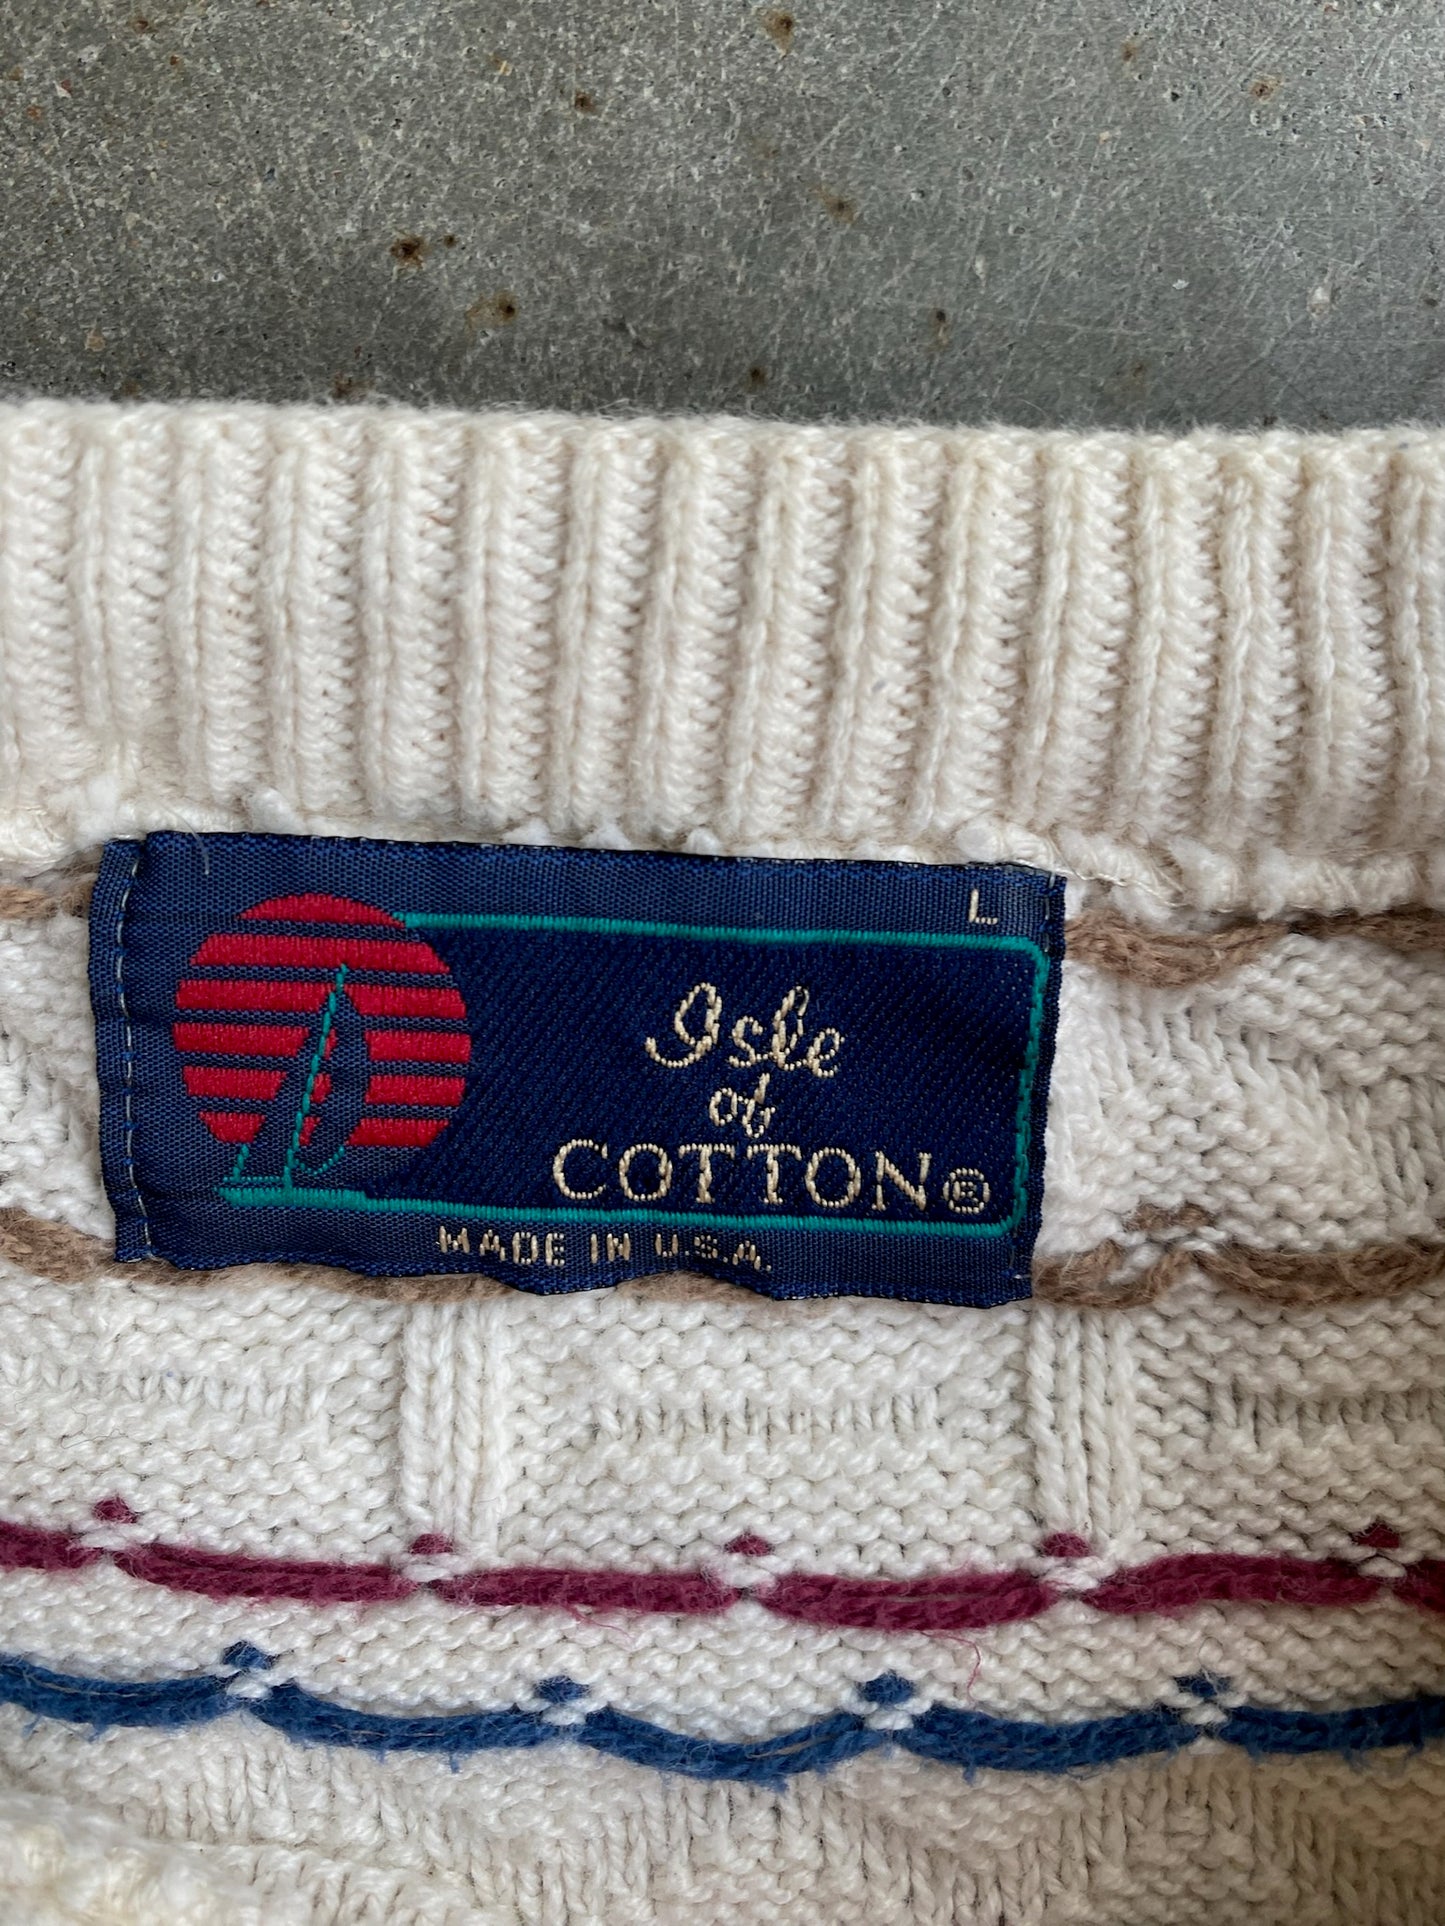 Vintage Isle of Cotton Sweater - L